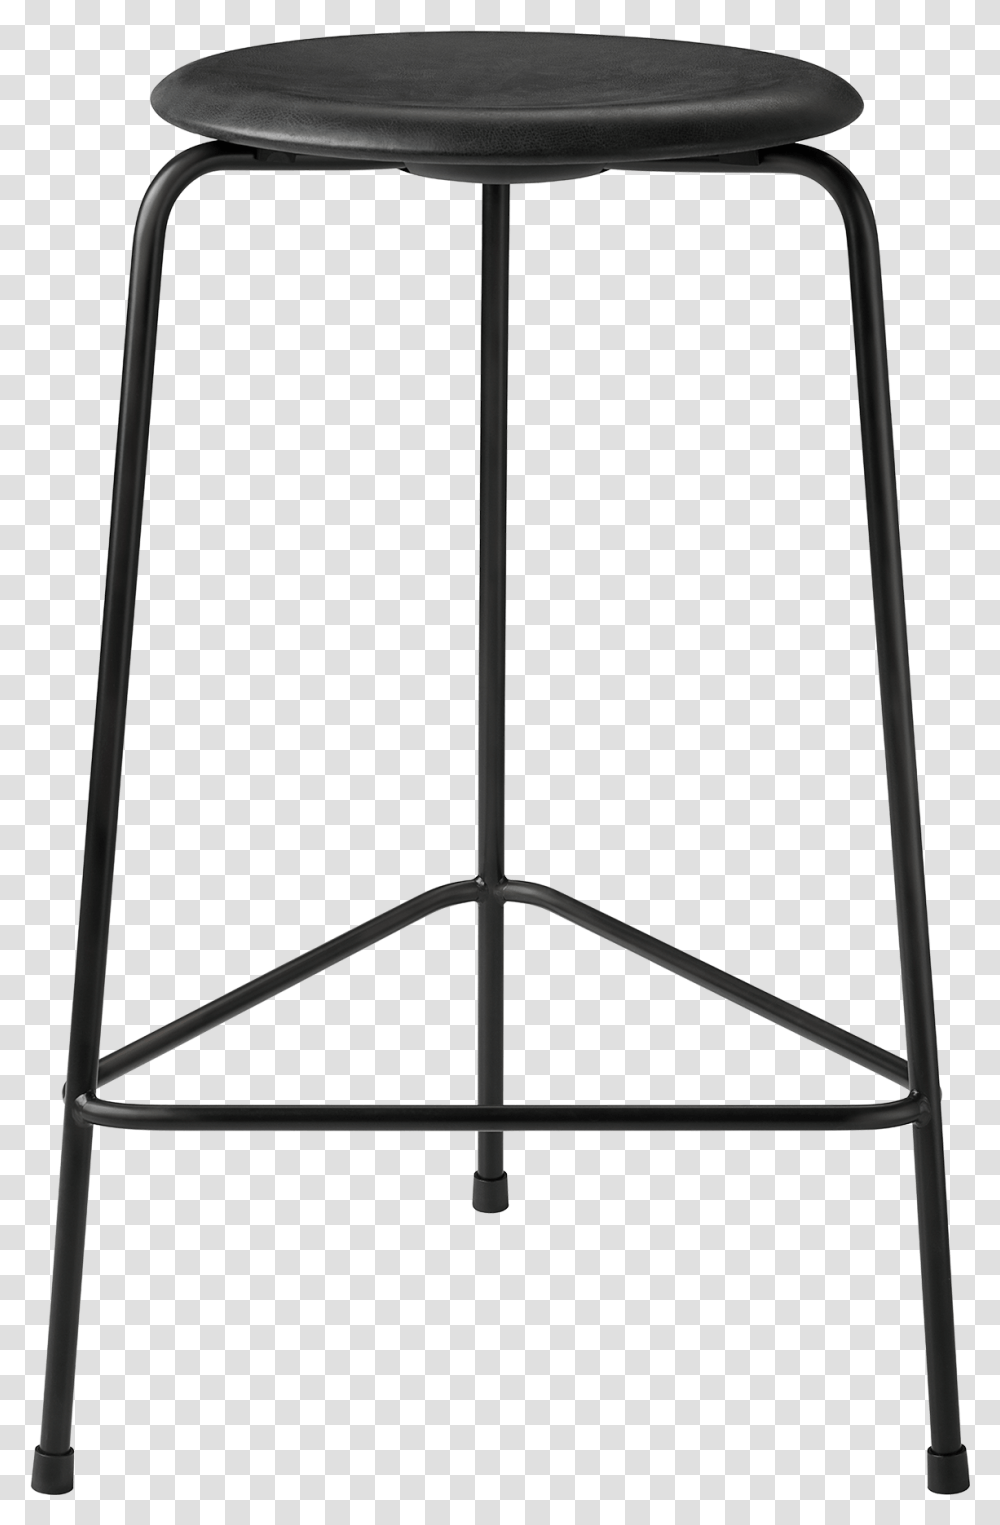 Three Legged Stool Clipart High Dot Stool, Tripod, Lamp, Utility Pole, Furniture Transparent Png